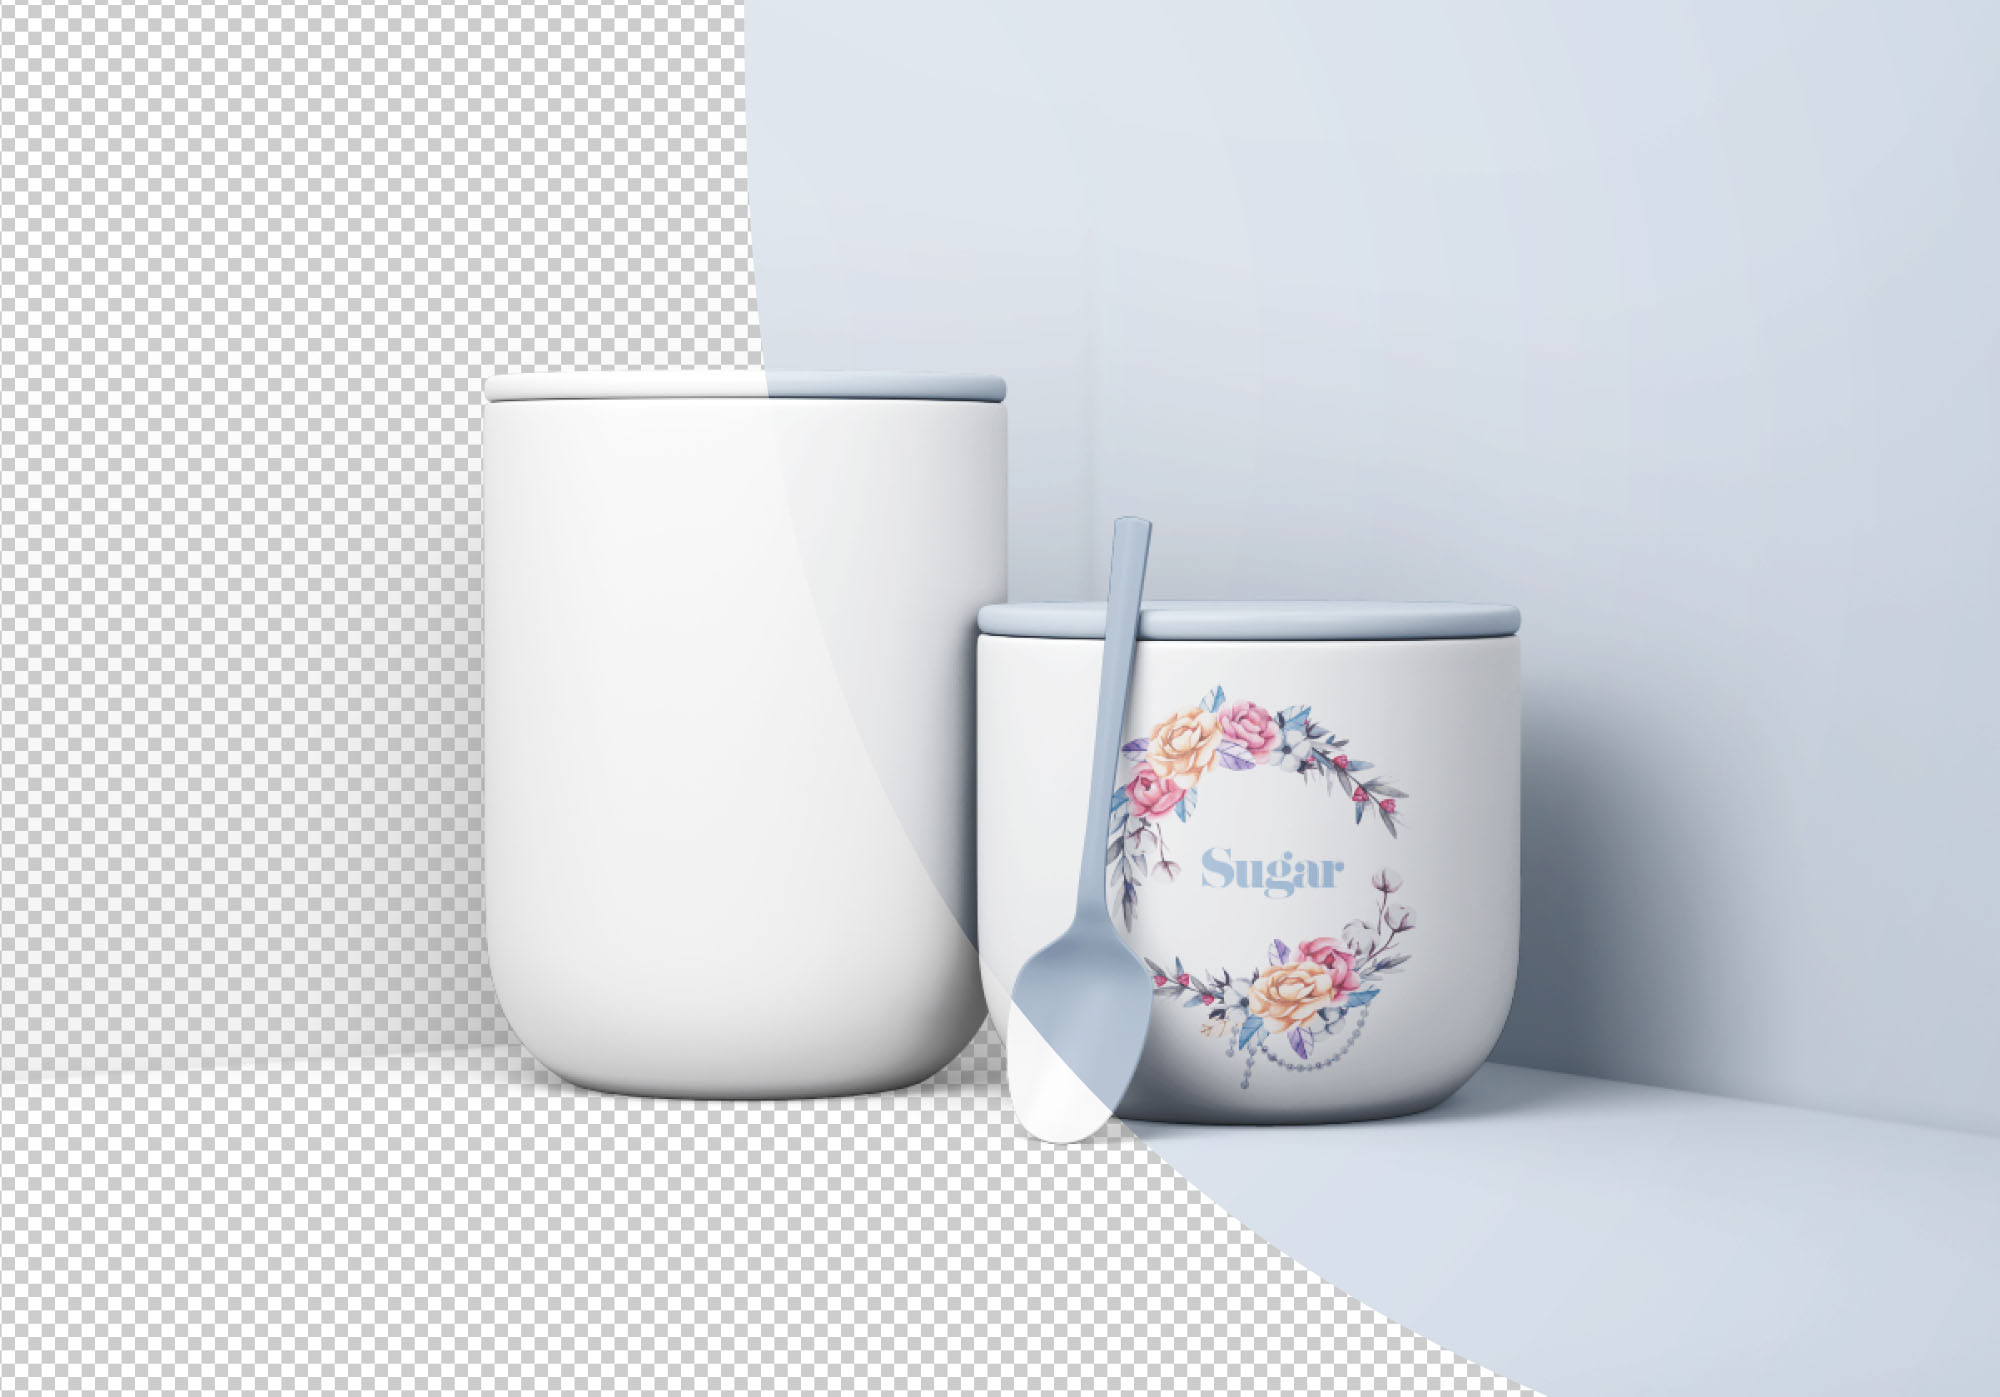 极简主义风食品储存罐样机模板 Minimal Jars with Spoon Mockup插图(2)